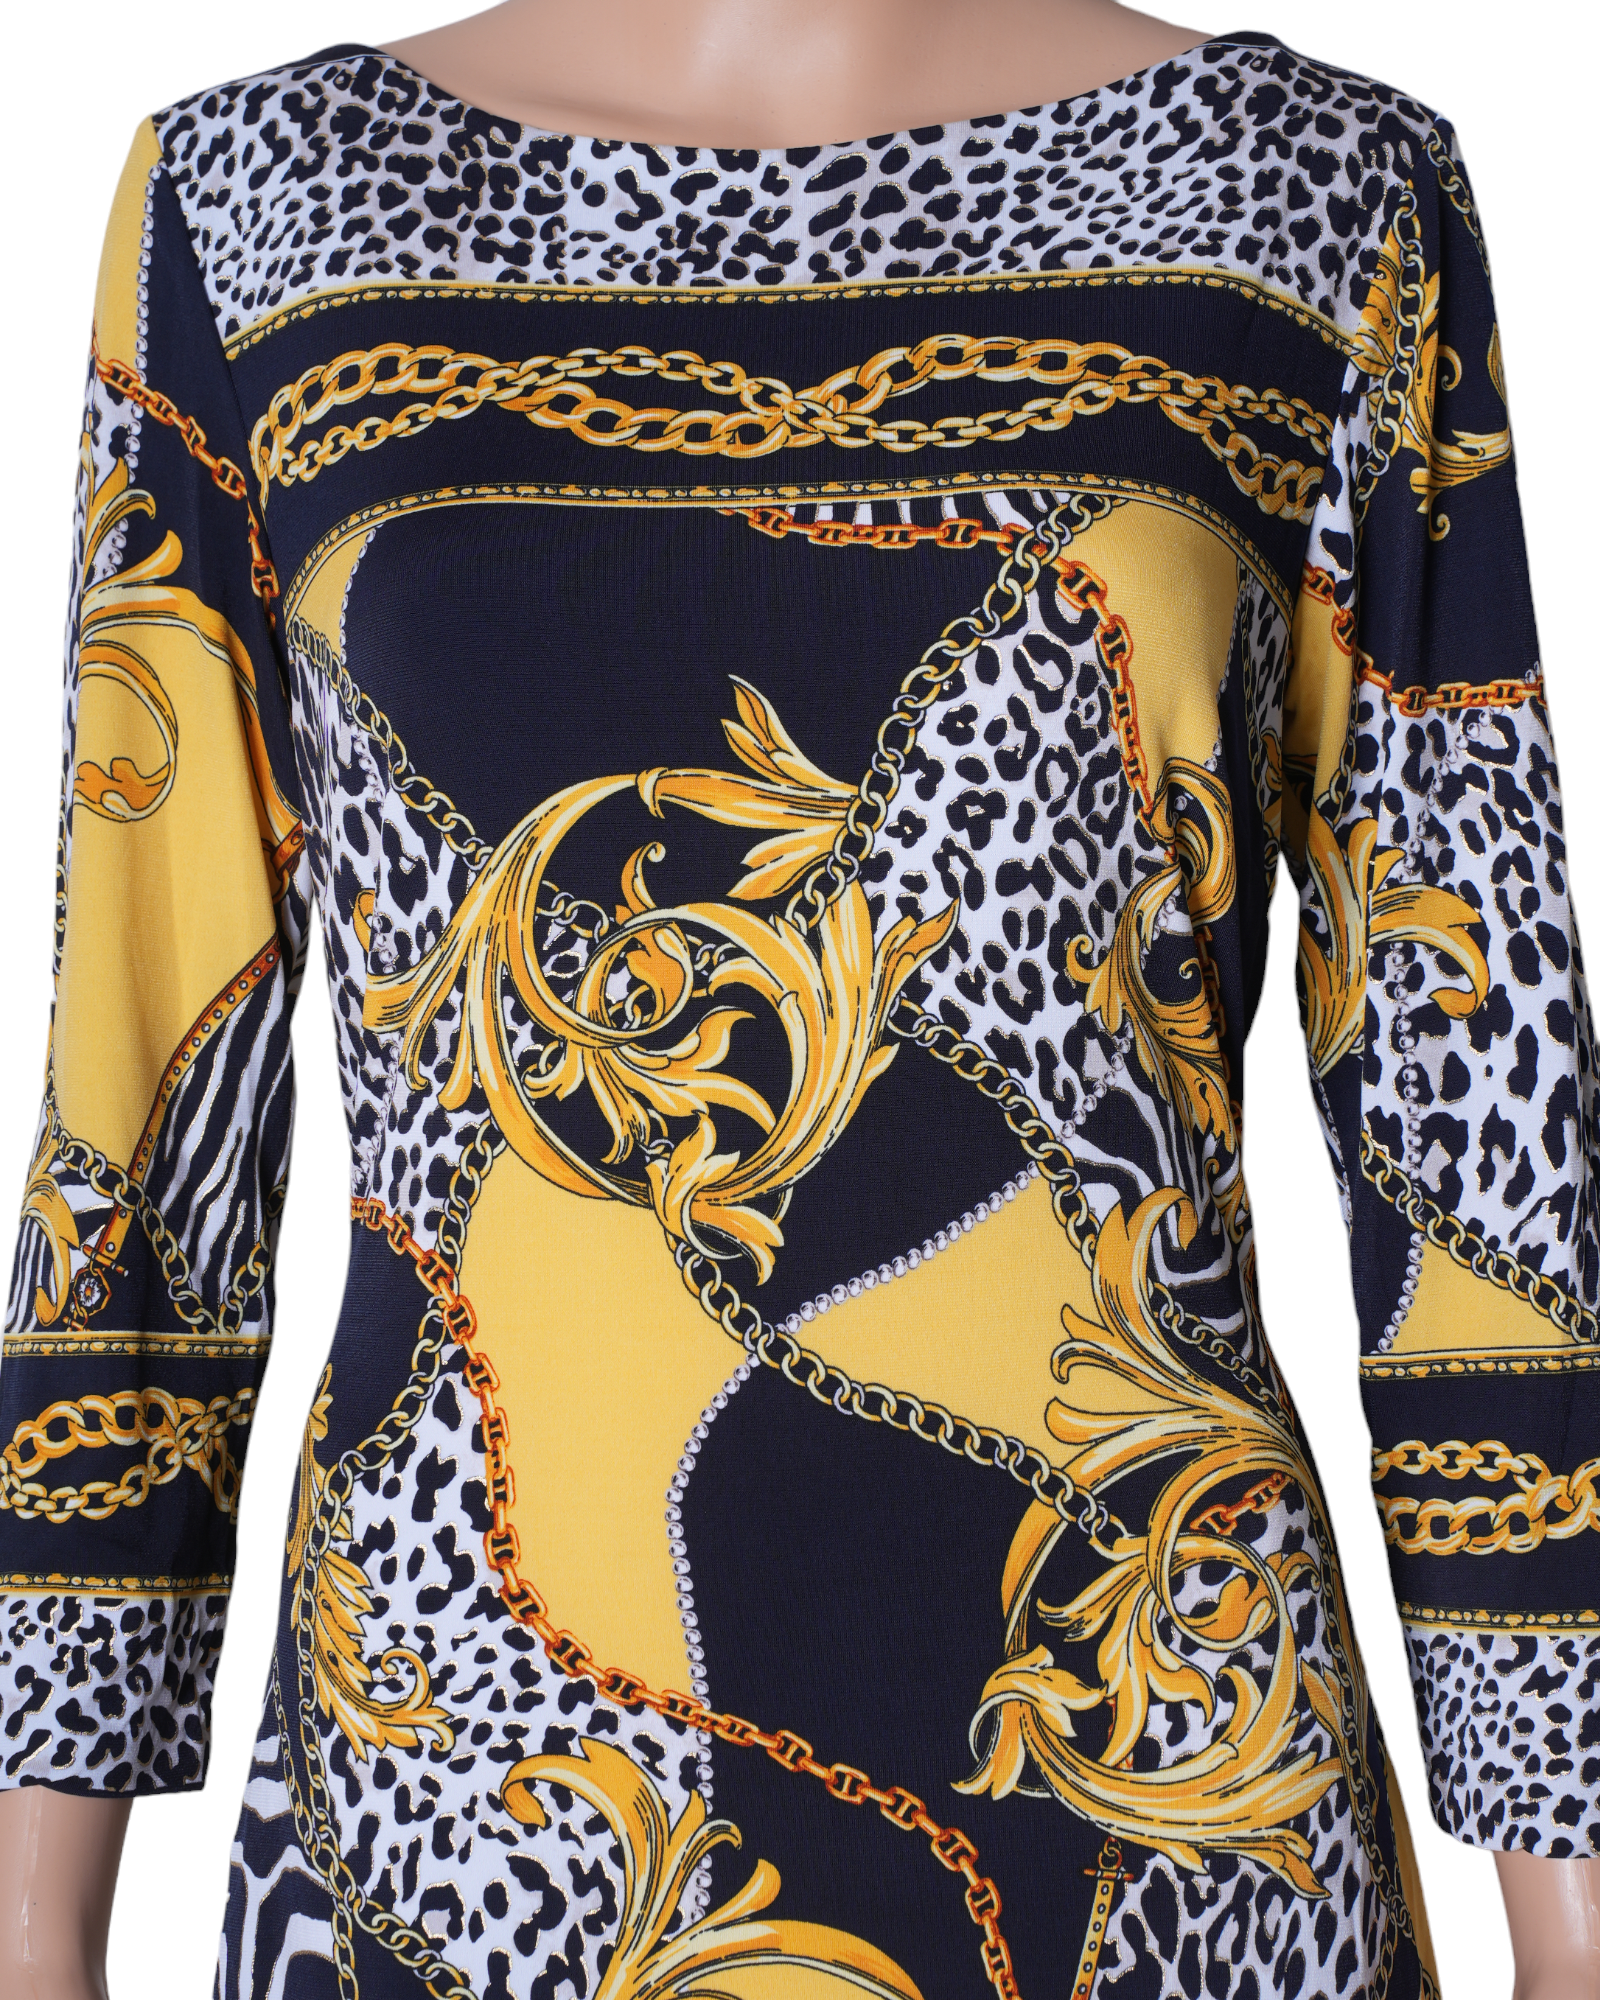 New Cache Sheath Printed Dress In Yellow & Black Leopard & Chain Print